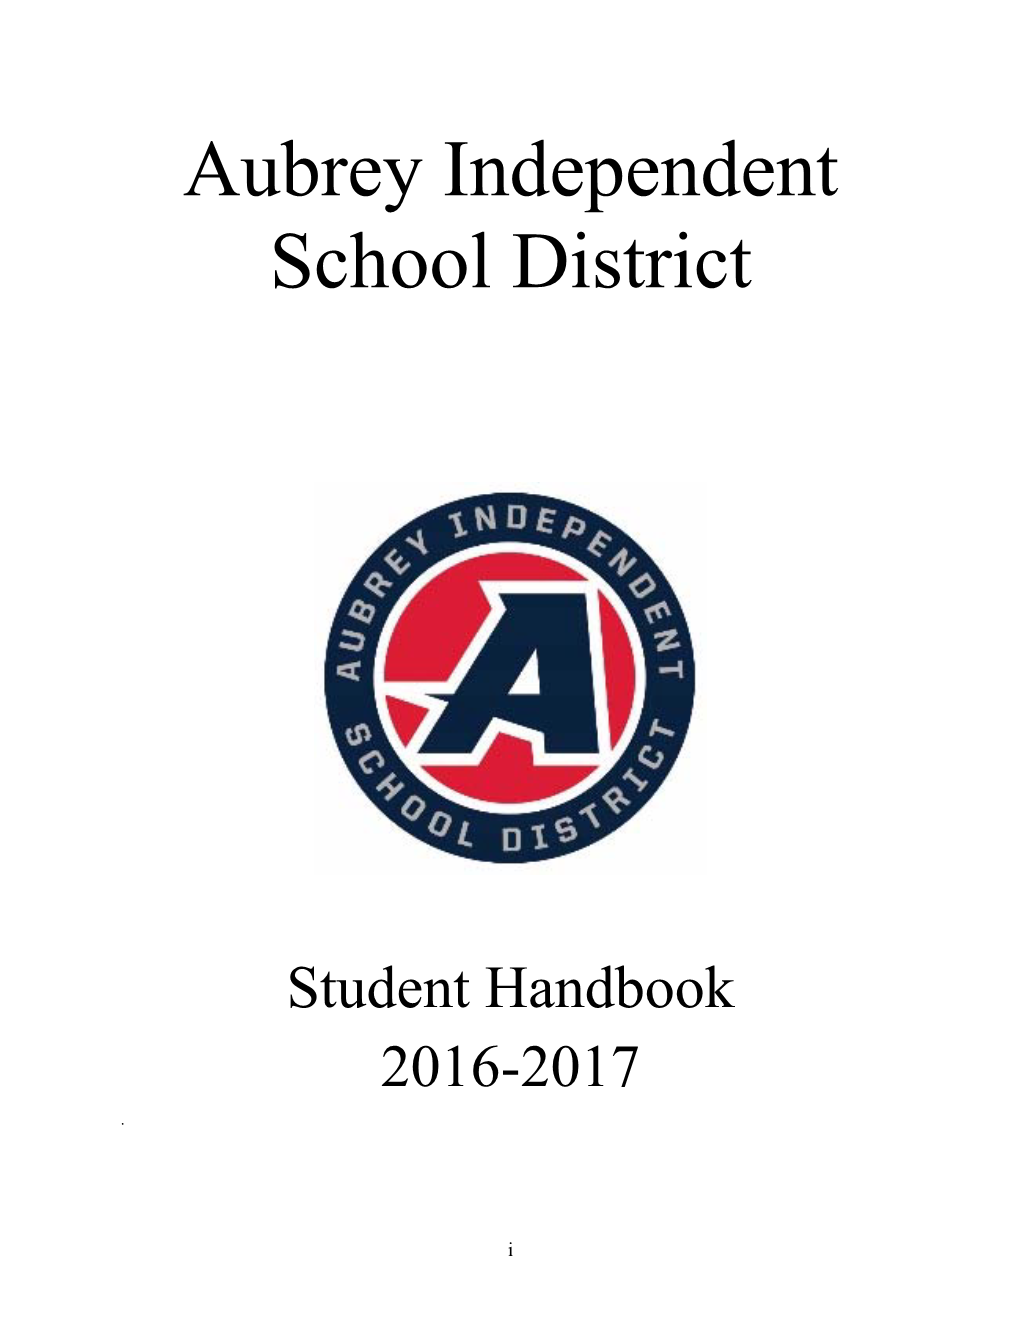 Aubrey Independent School District